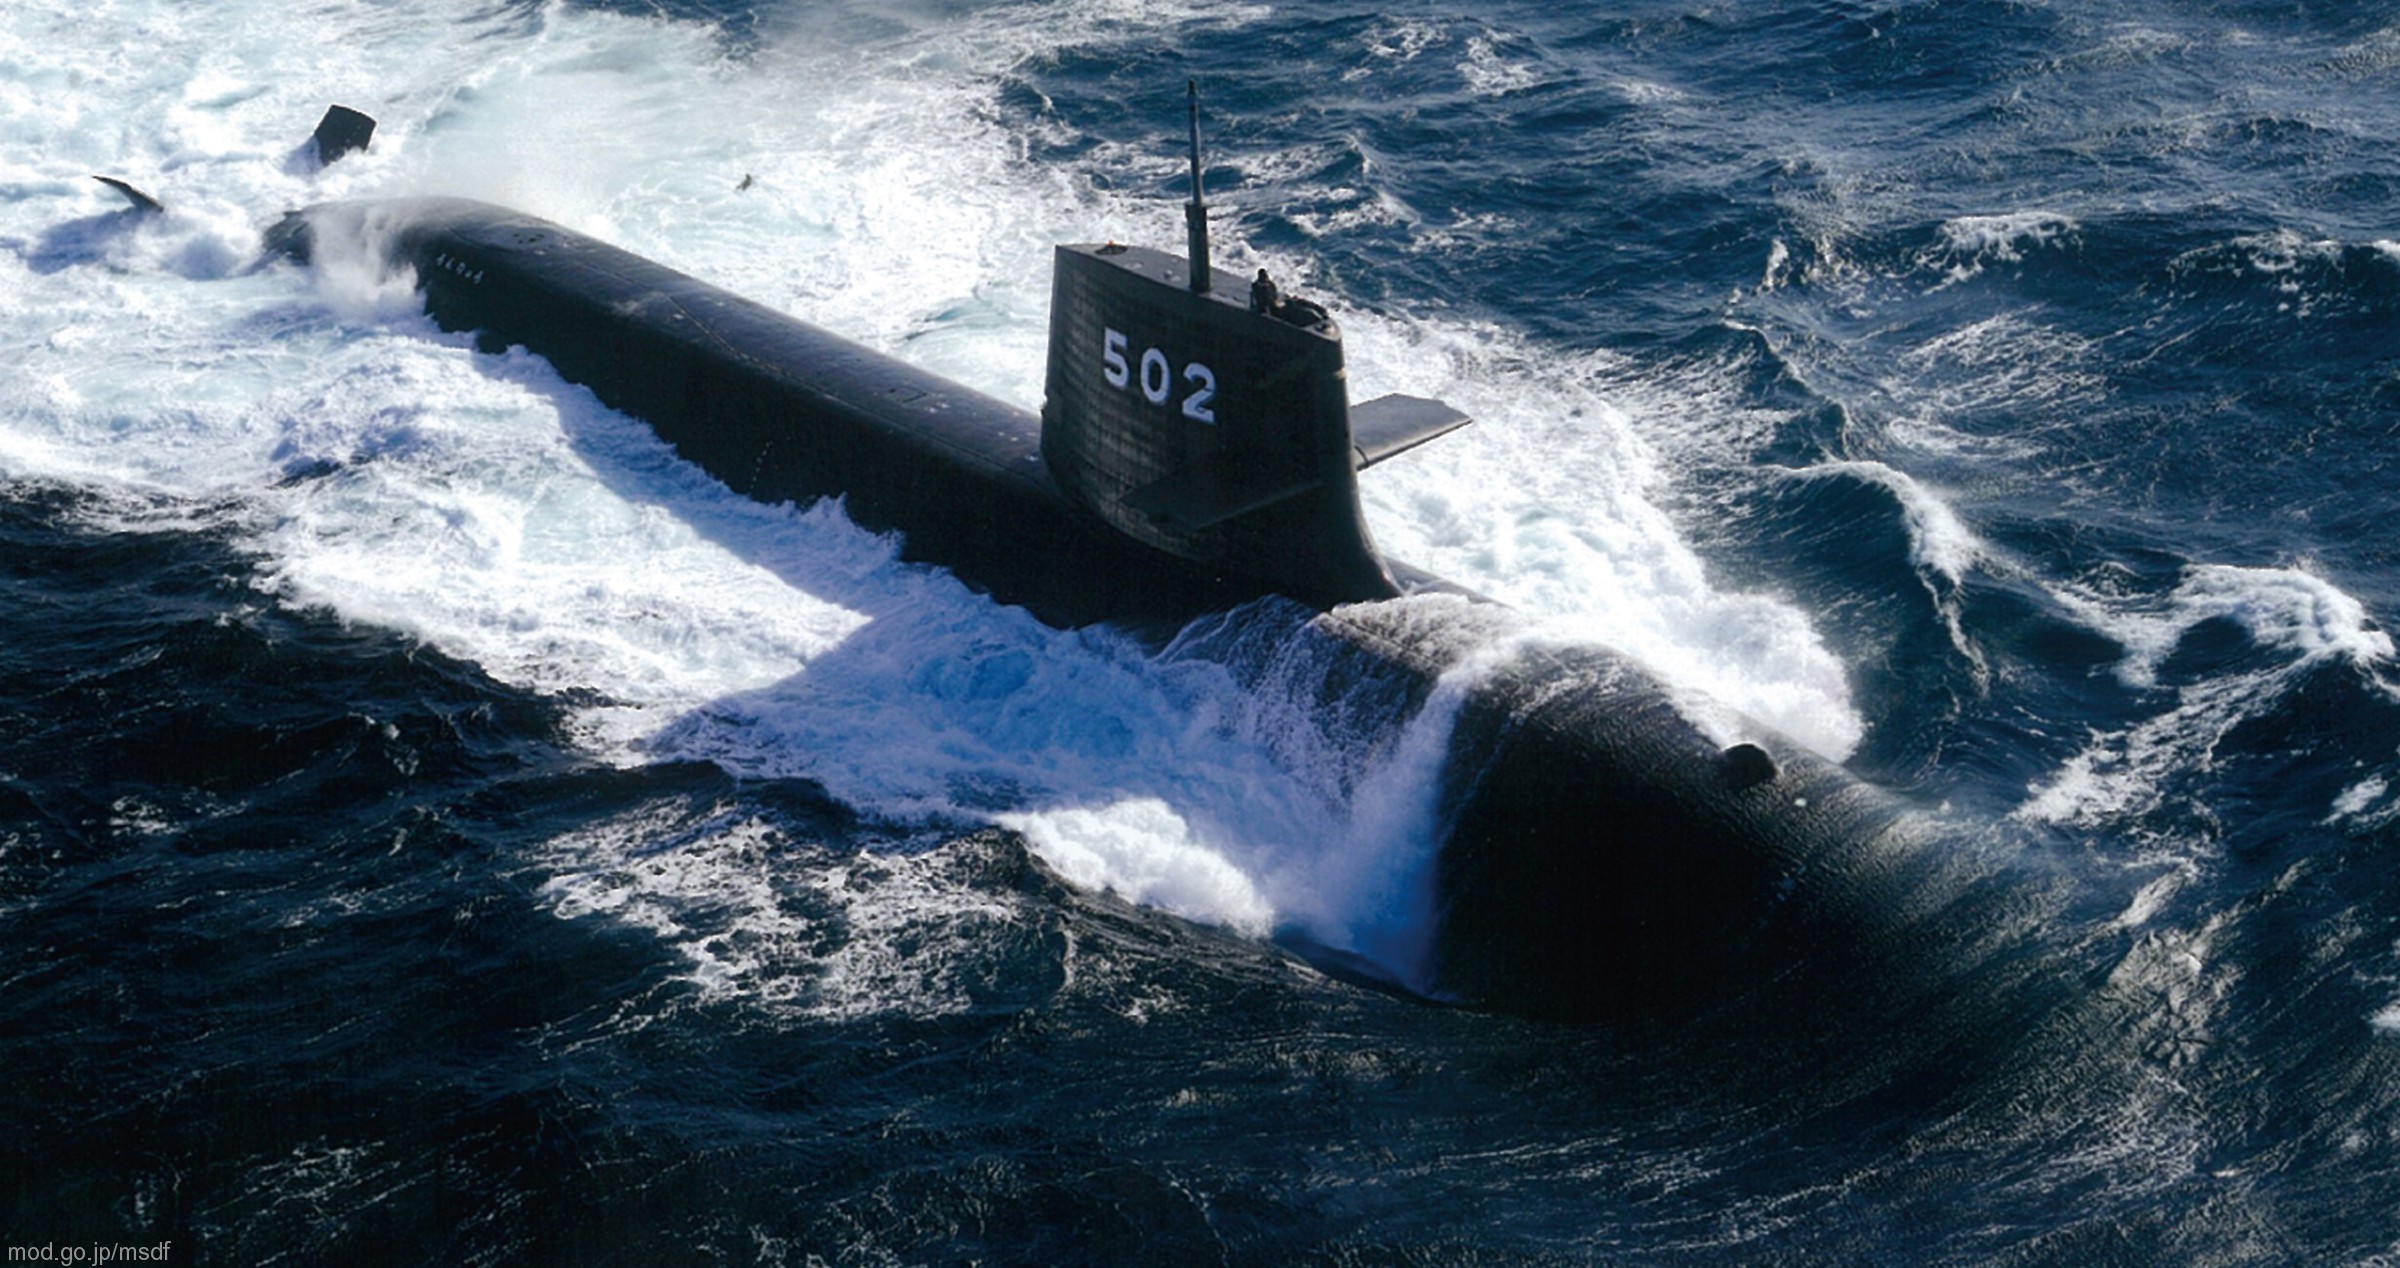 ss-502 js unryu 16ss class attack submarine ssk japan maritime self defense force jmsdf 08